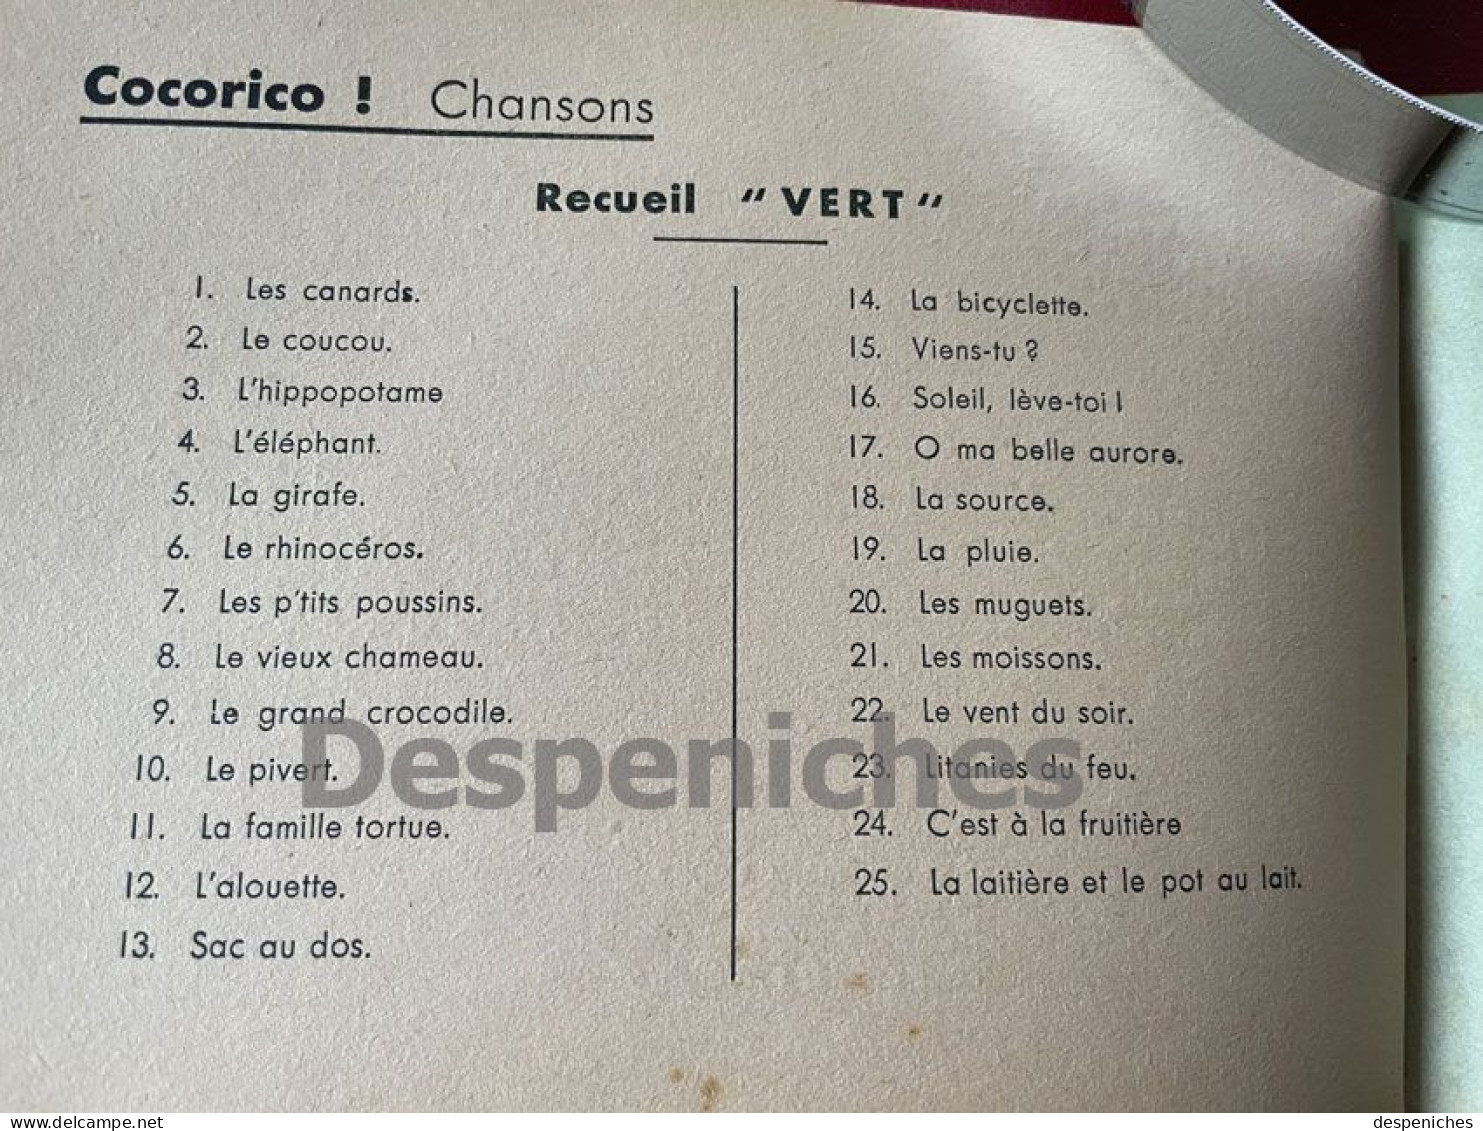 Recueil De CHANSONS :"Cocorico" Recueil Vert - Léon Robert Brice Voir Photos - Musique